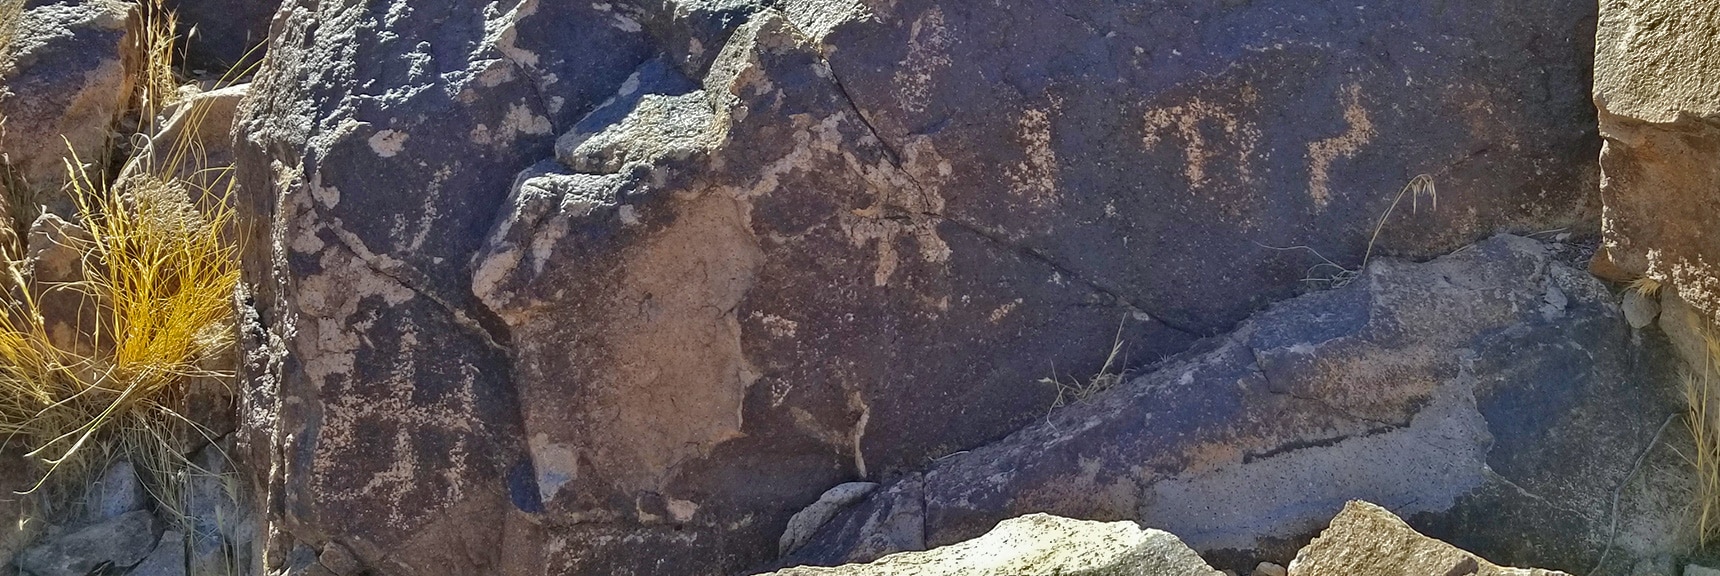 | Petroglyph Canyon | Sloan Canyon National Conservation Area, Nevada